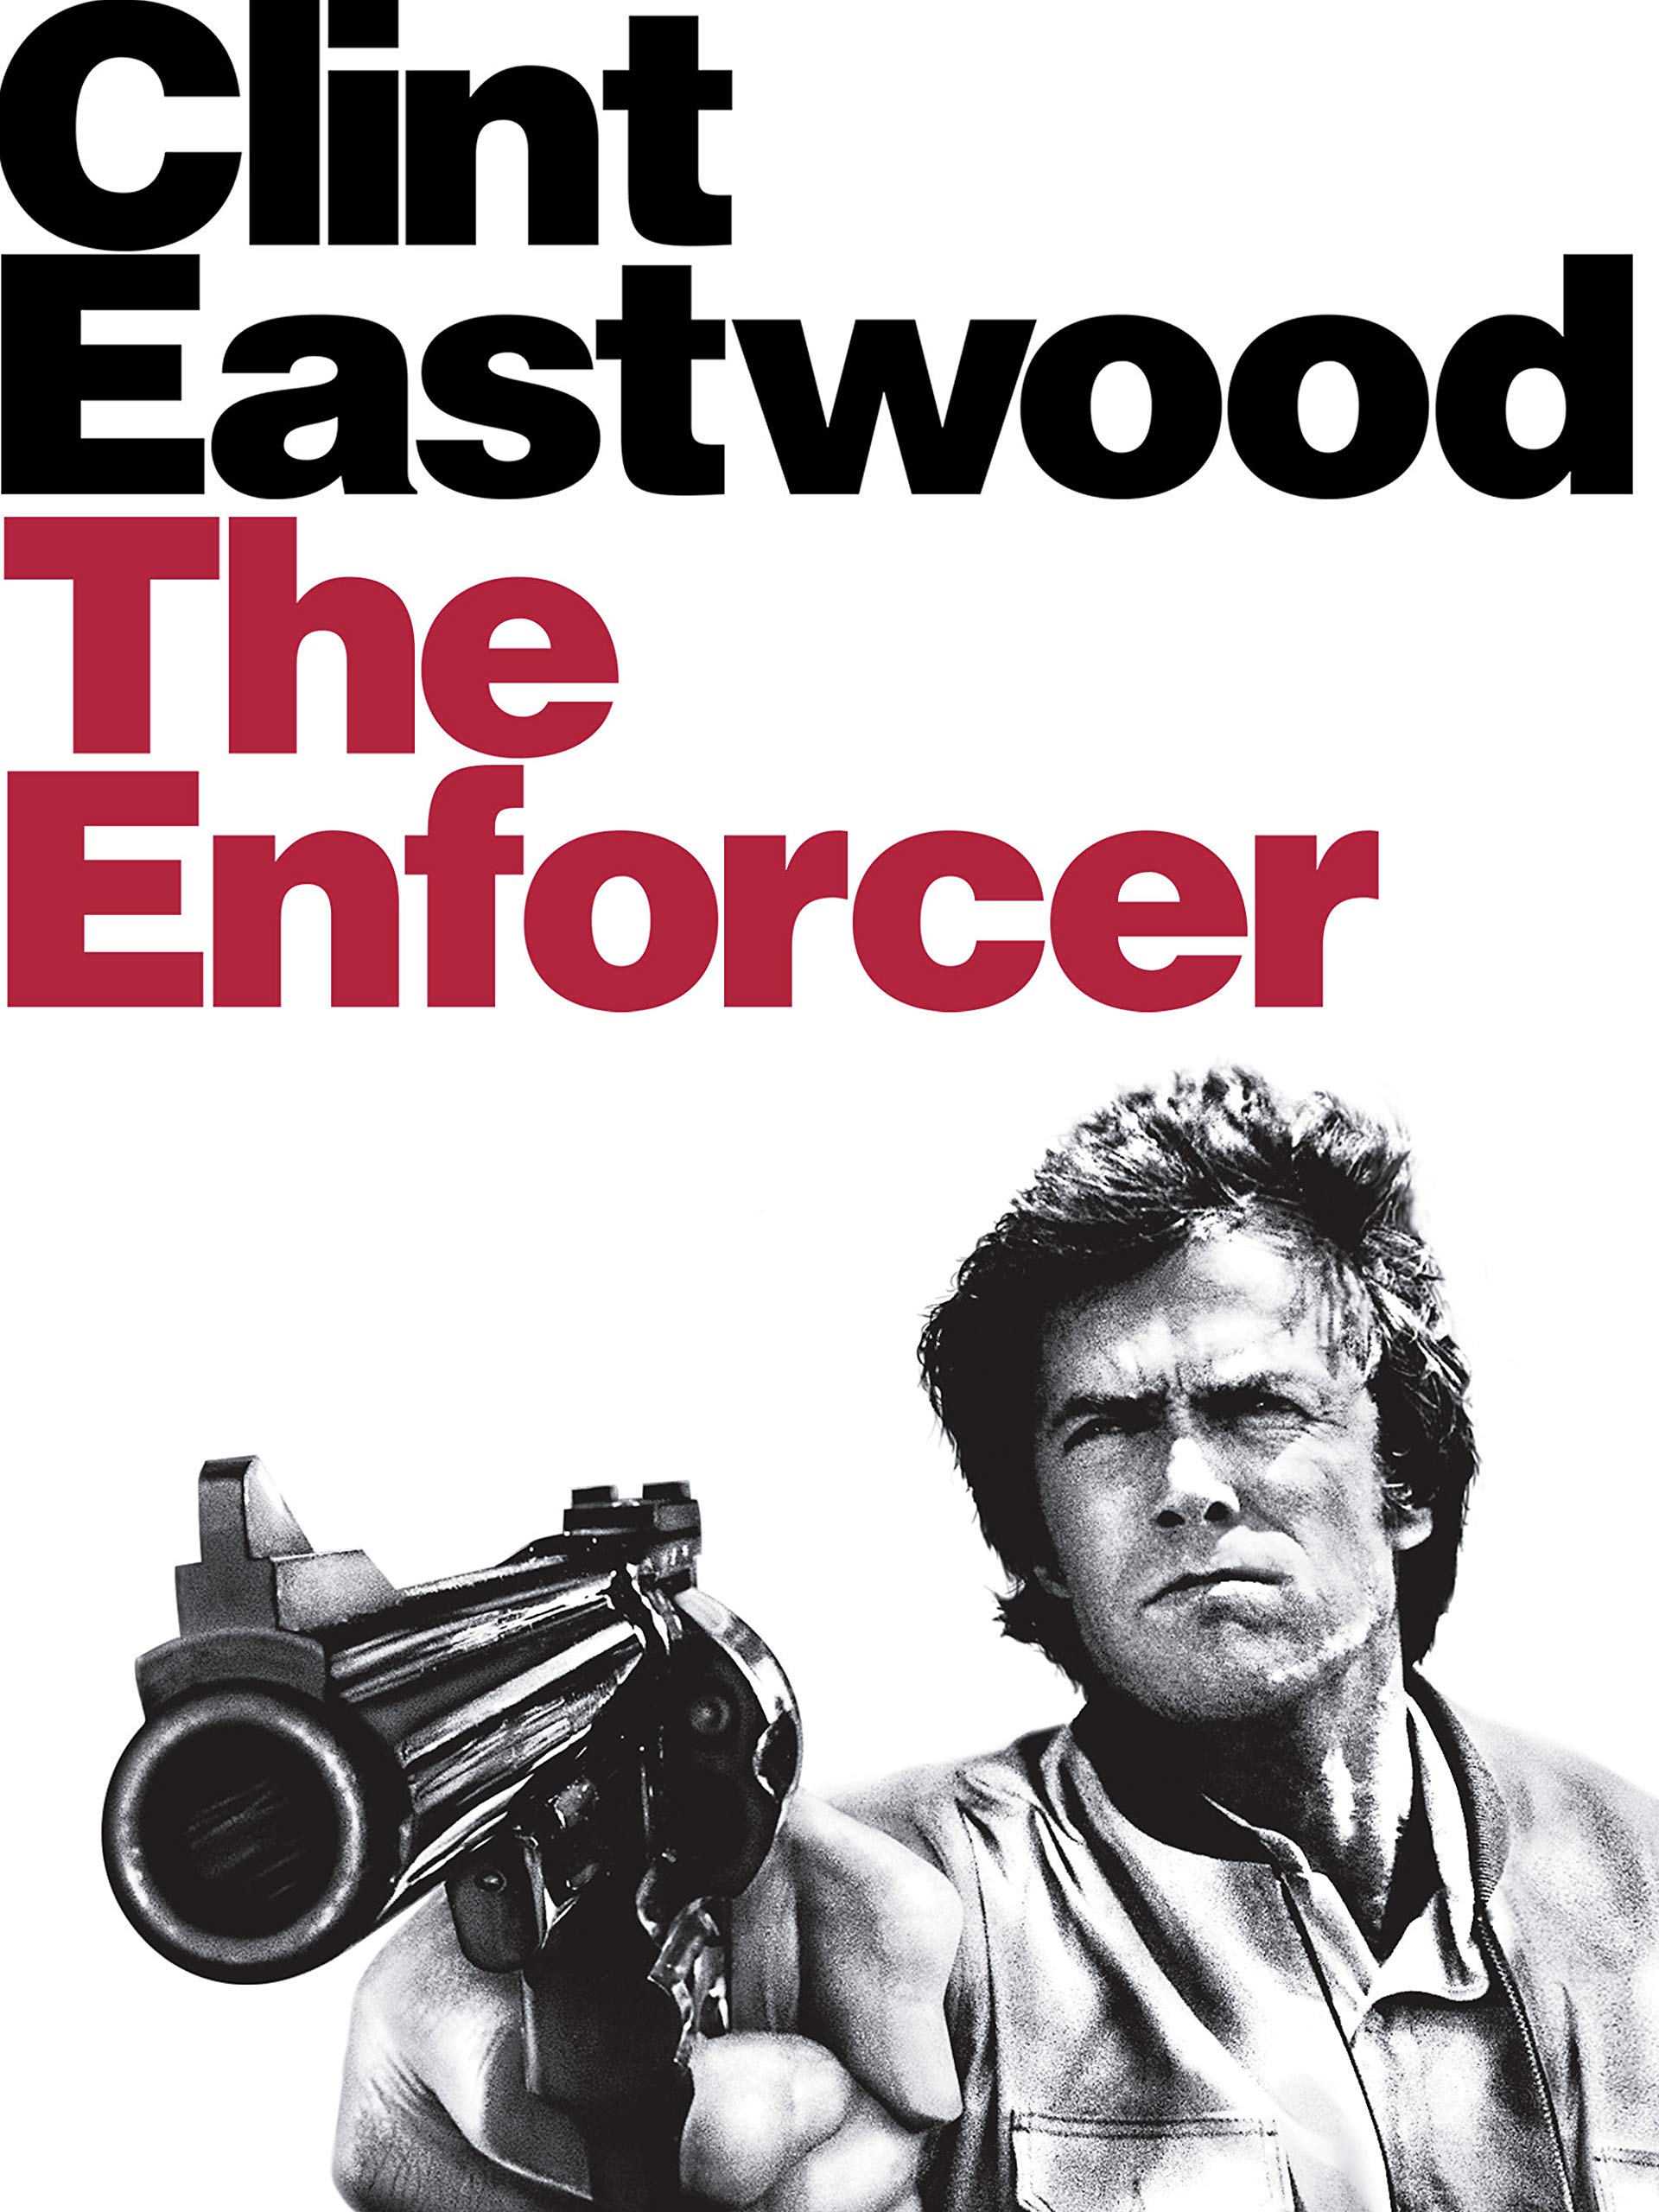 The Enforcer (1976) มือปราบปืนโหด